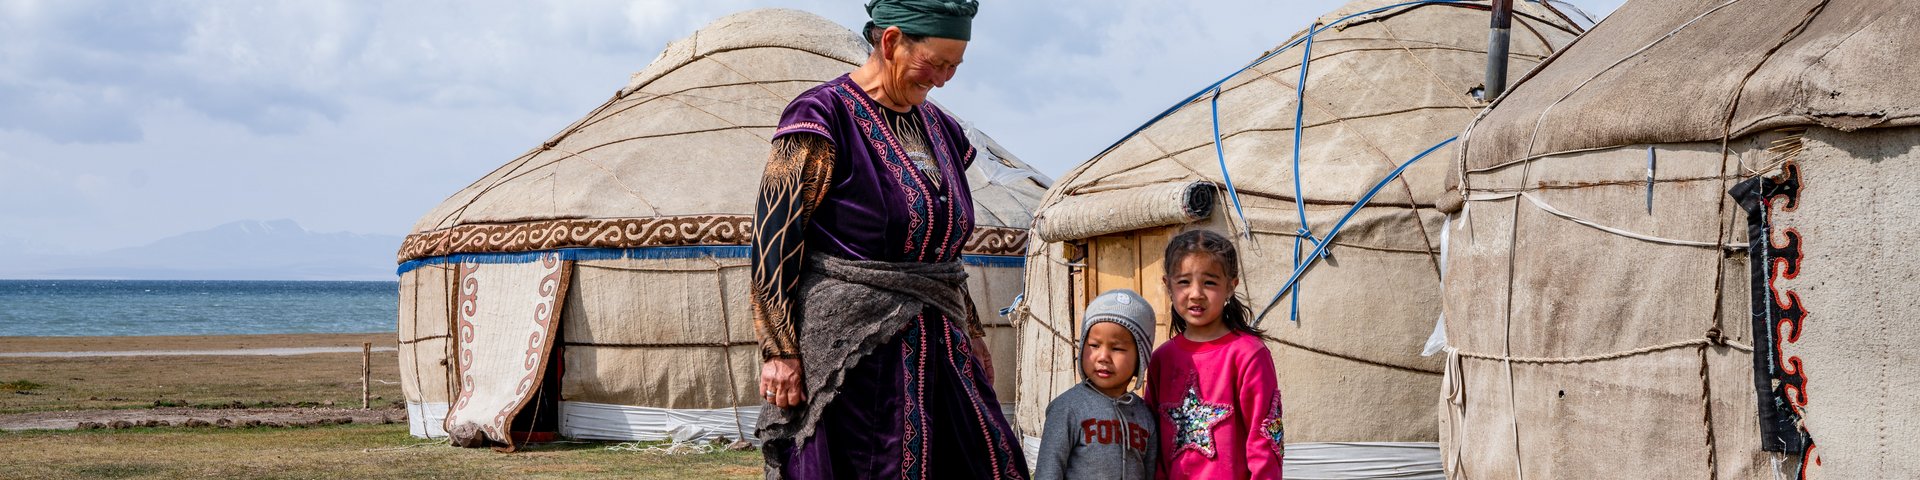 Kirgisische Familie vor ihren Jurten